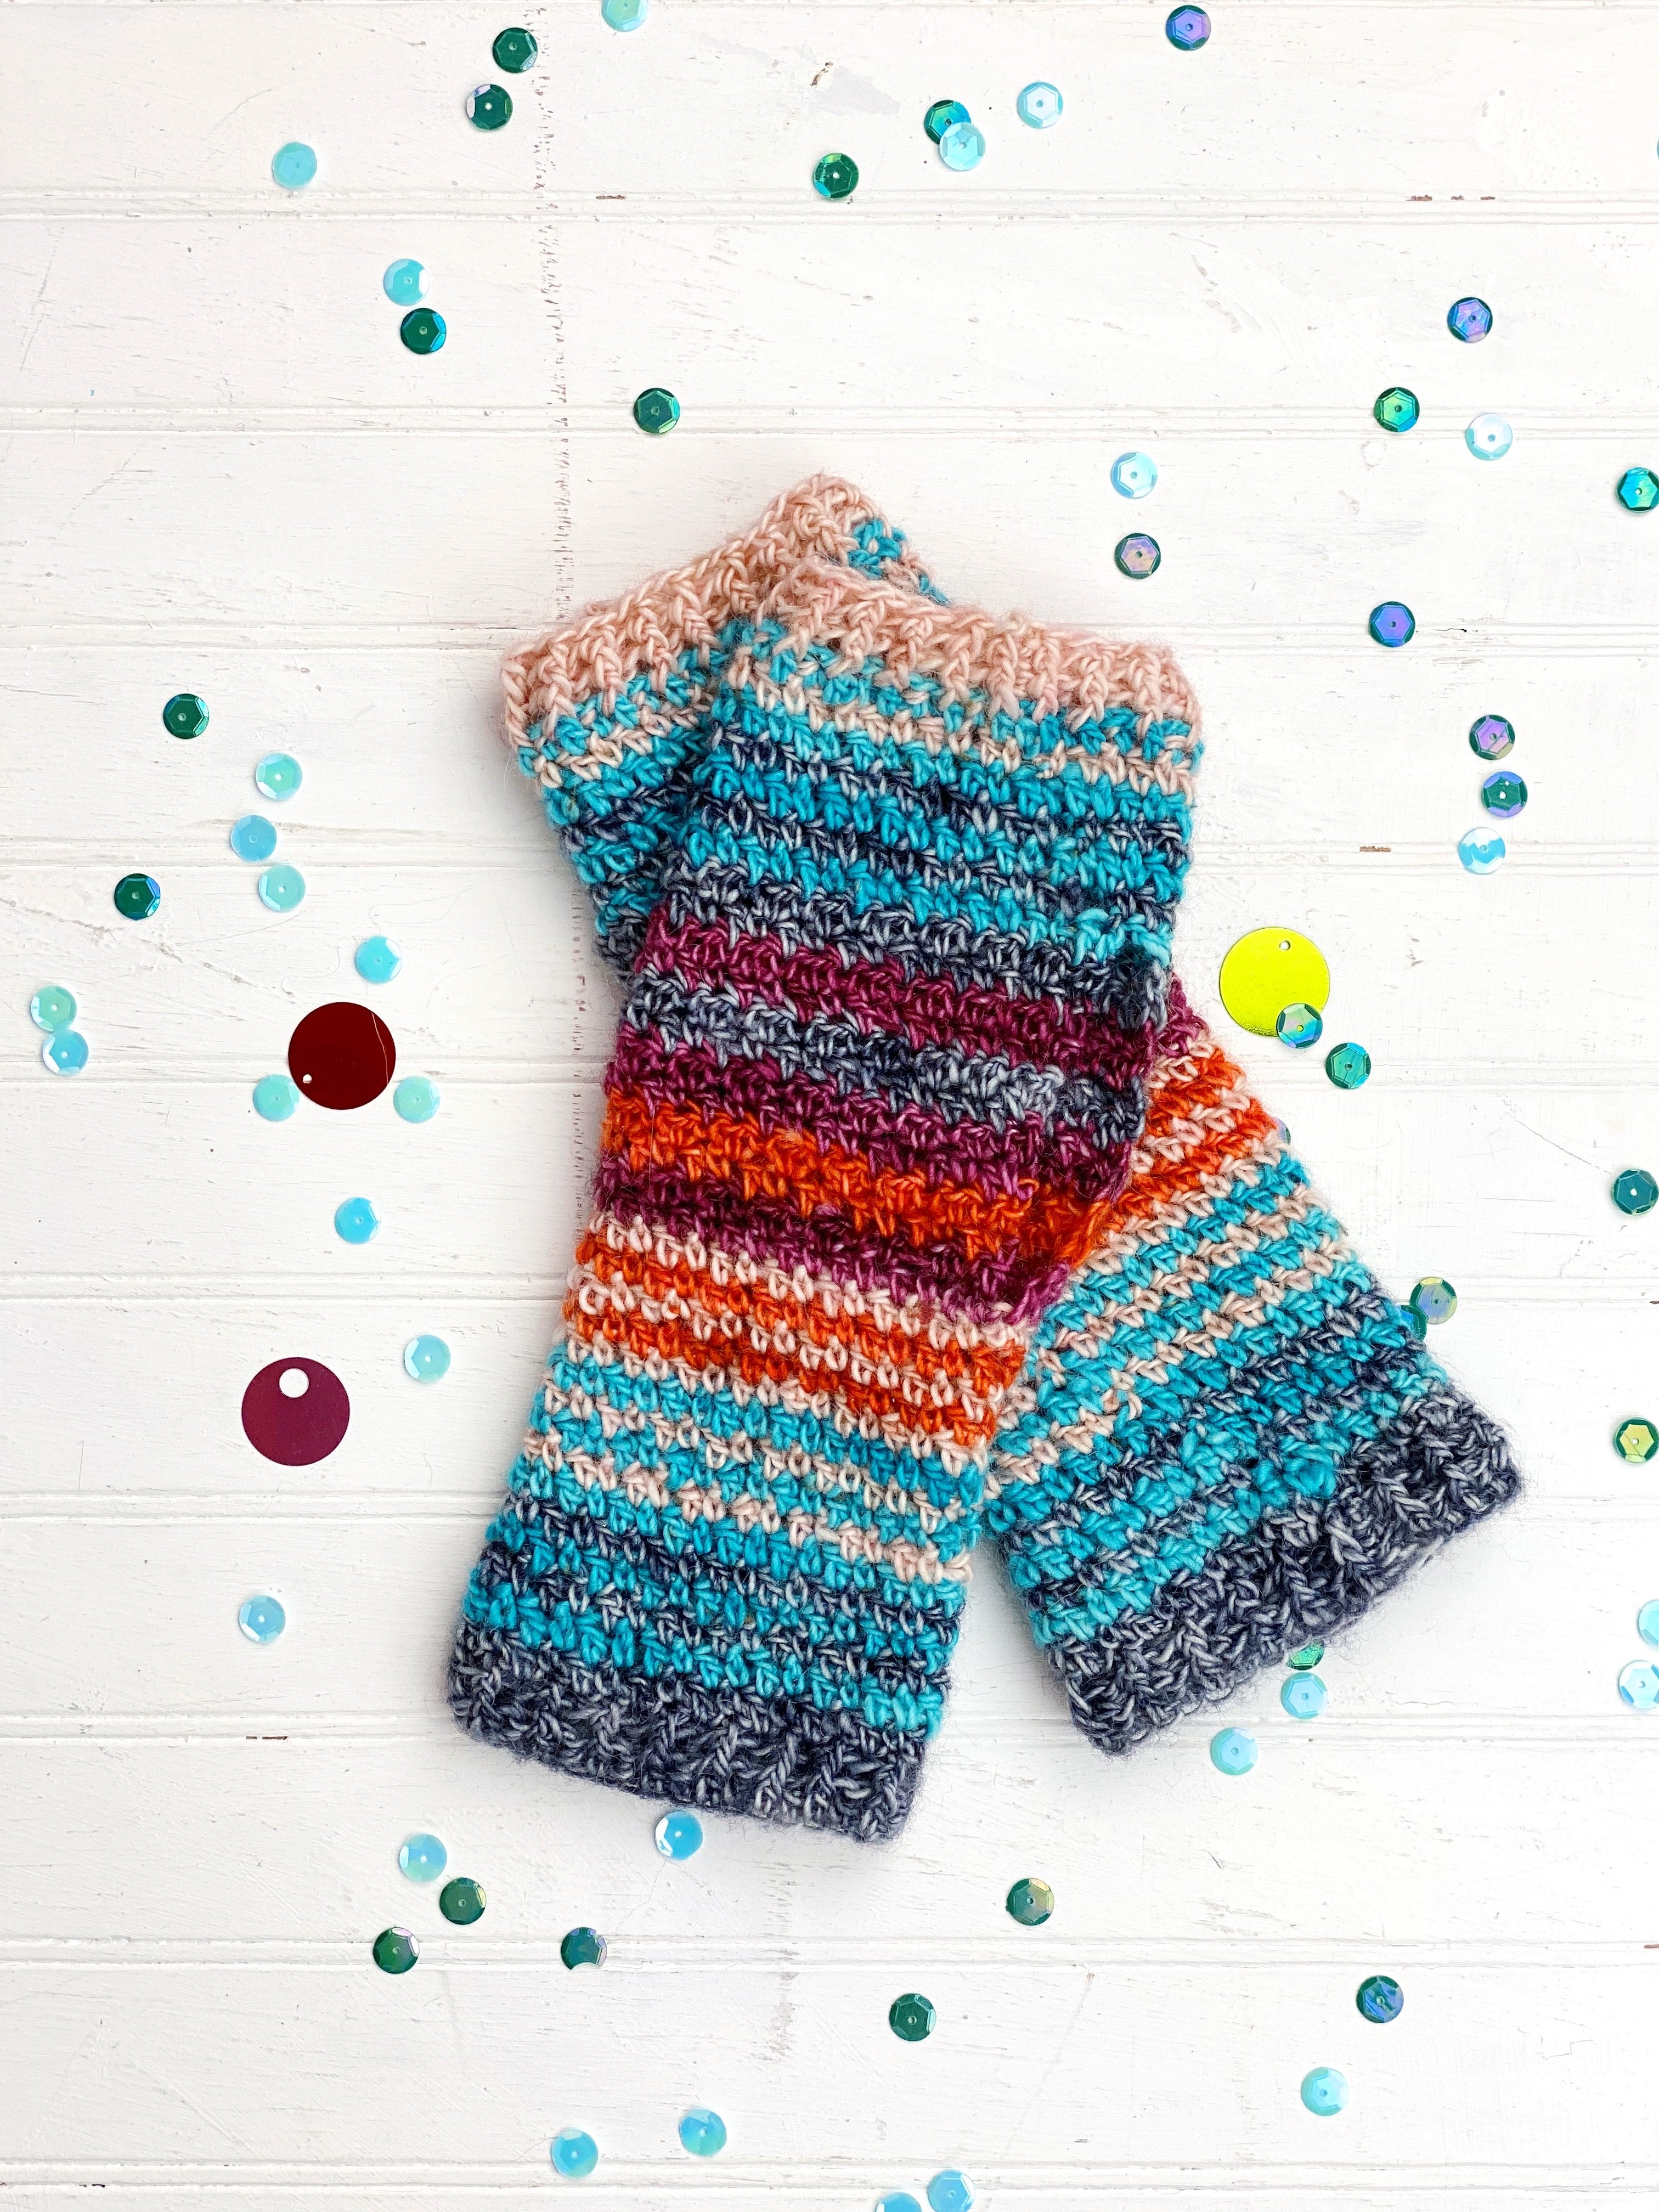 5 Fine Gauge Crochet Hooks - HiyaHiya – gather here online